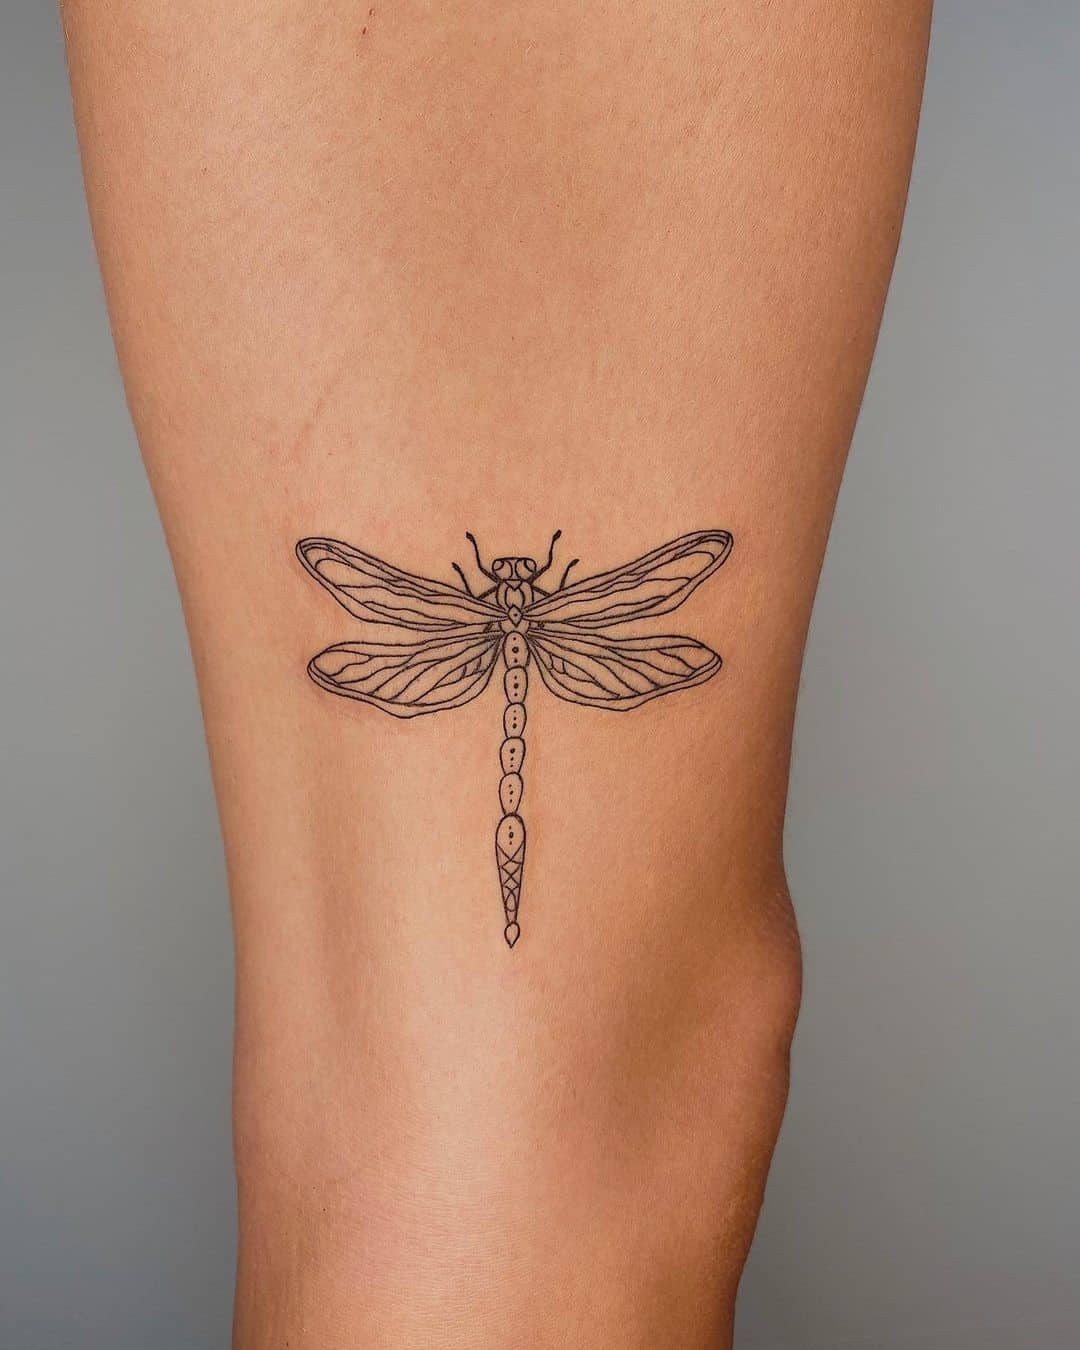 Pequeña idea simple del tatuaje de la libélula